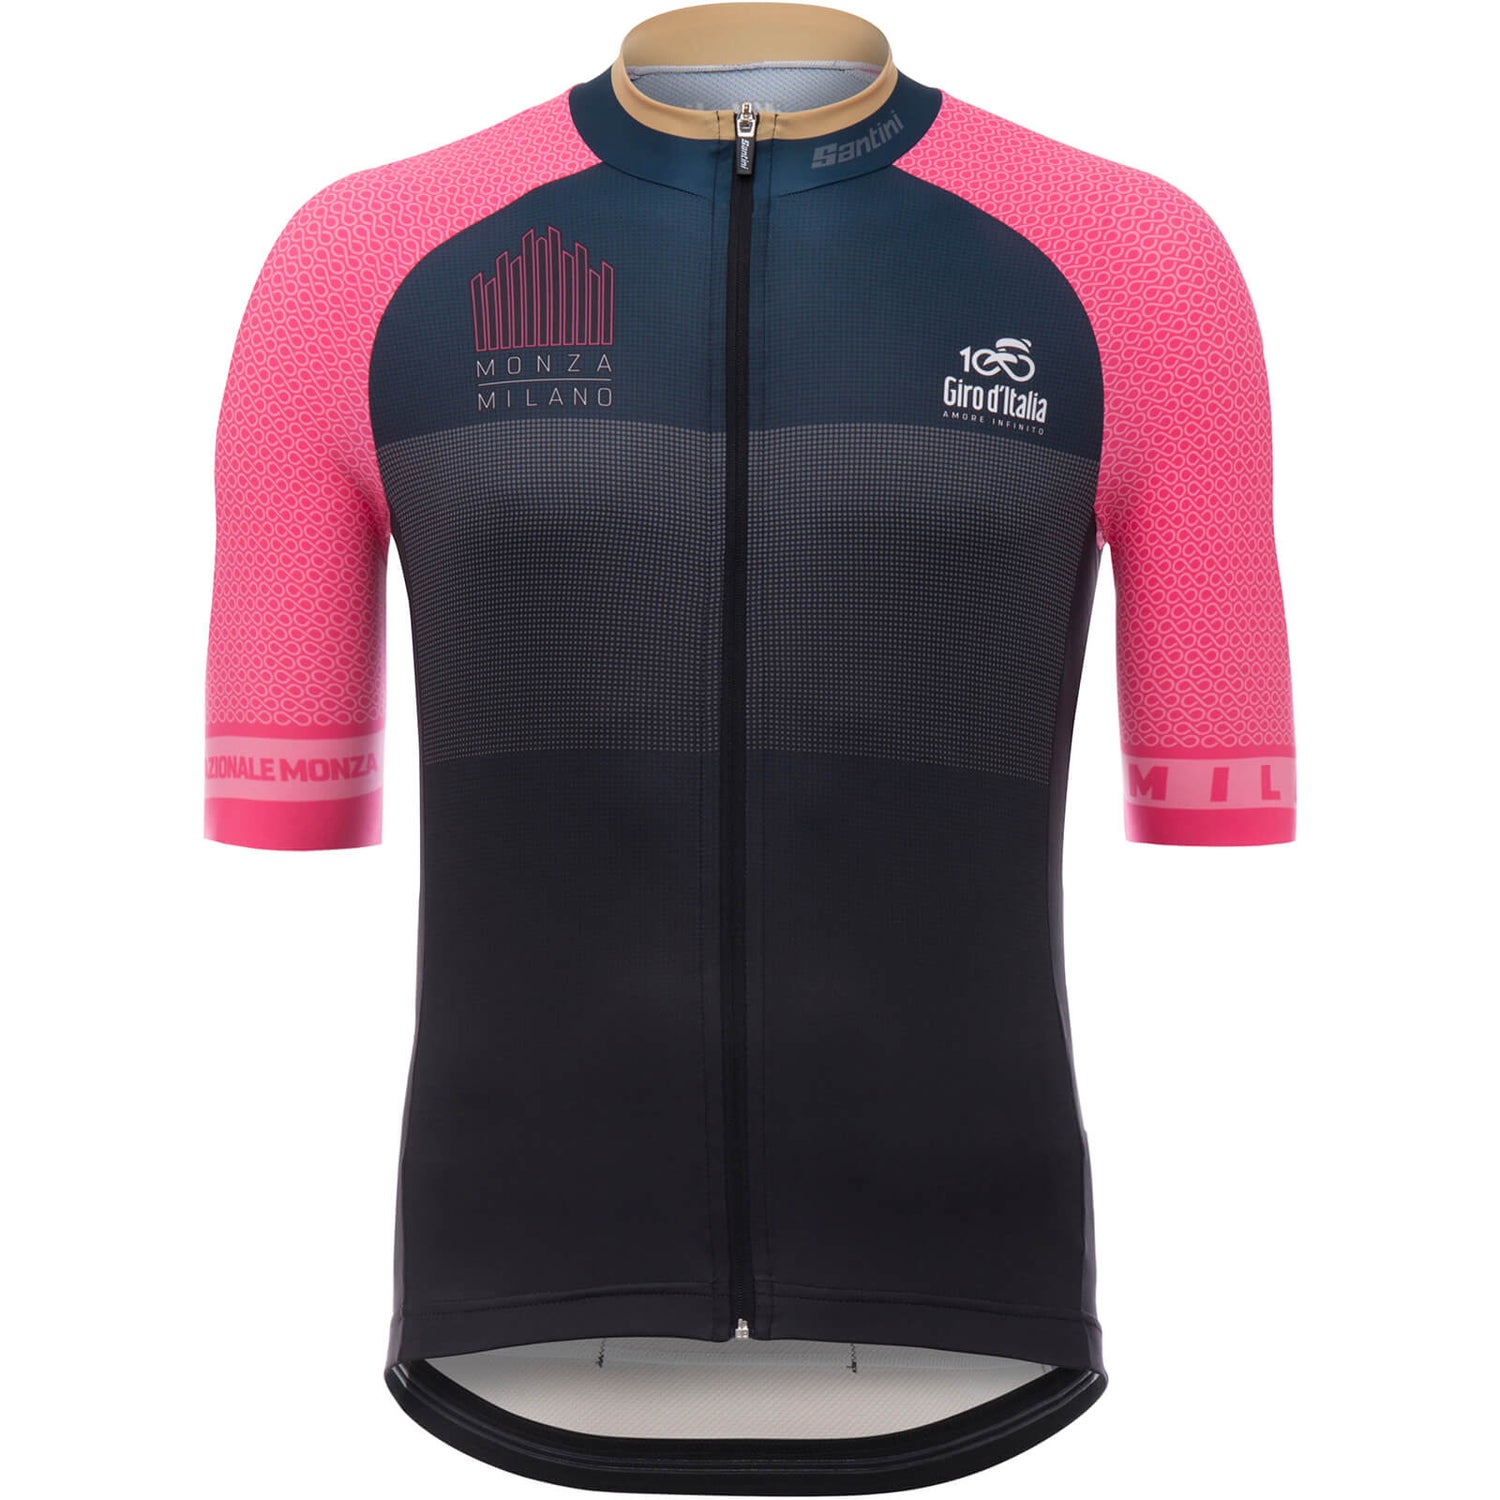 by Santini 2017 Giro d'Italia Stage 21 Monza Milano Cycling Bib Shorts